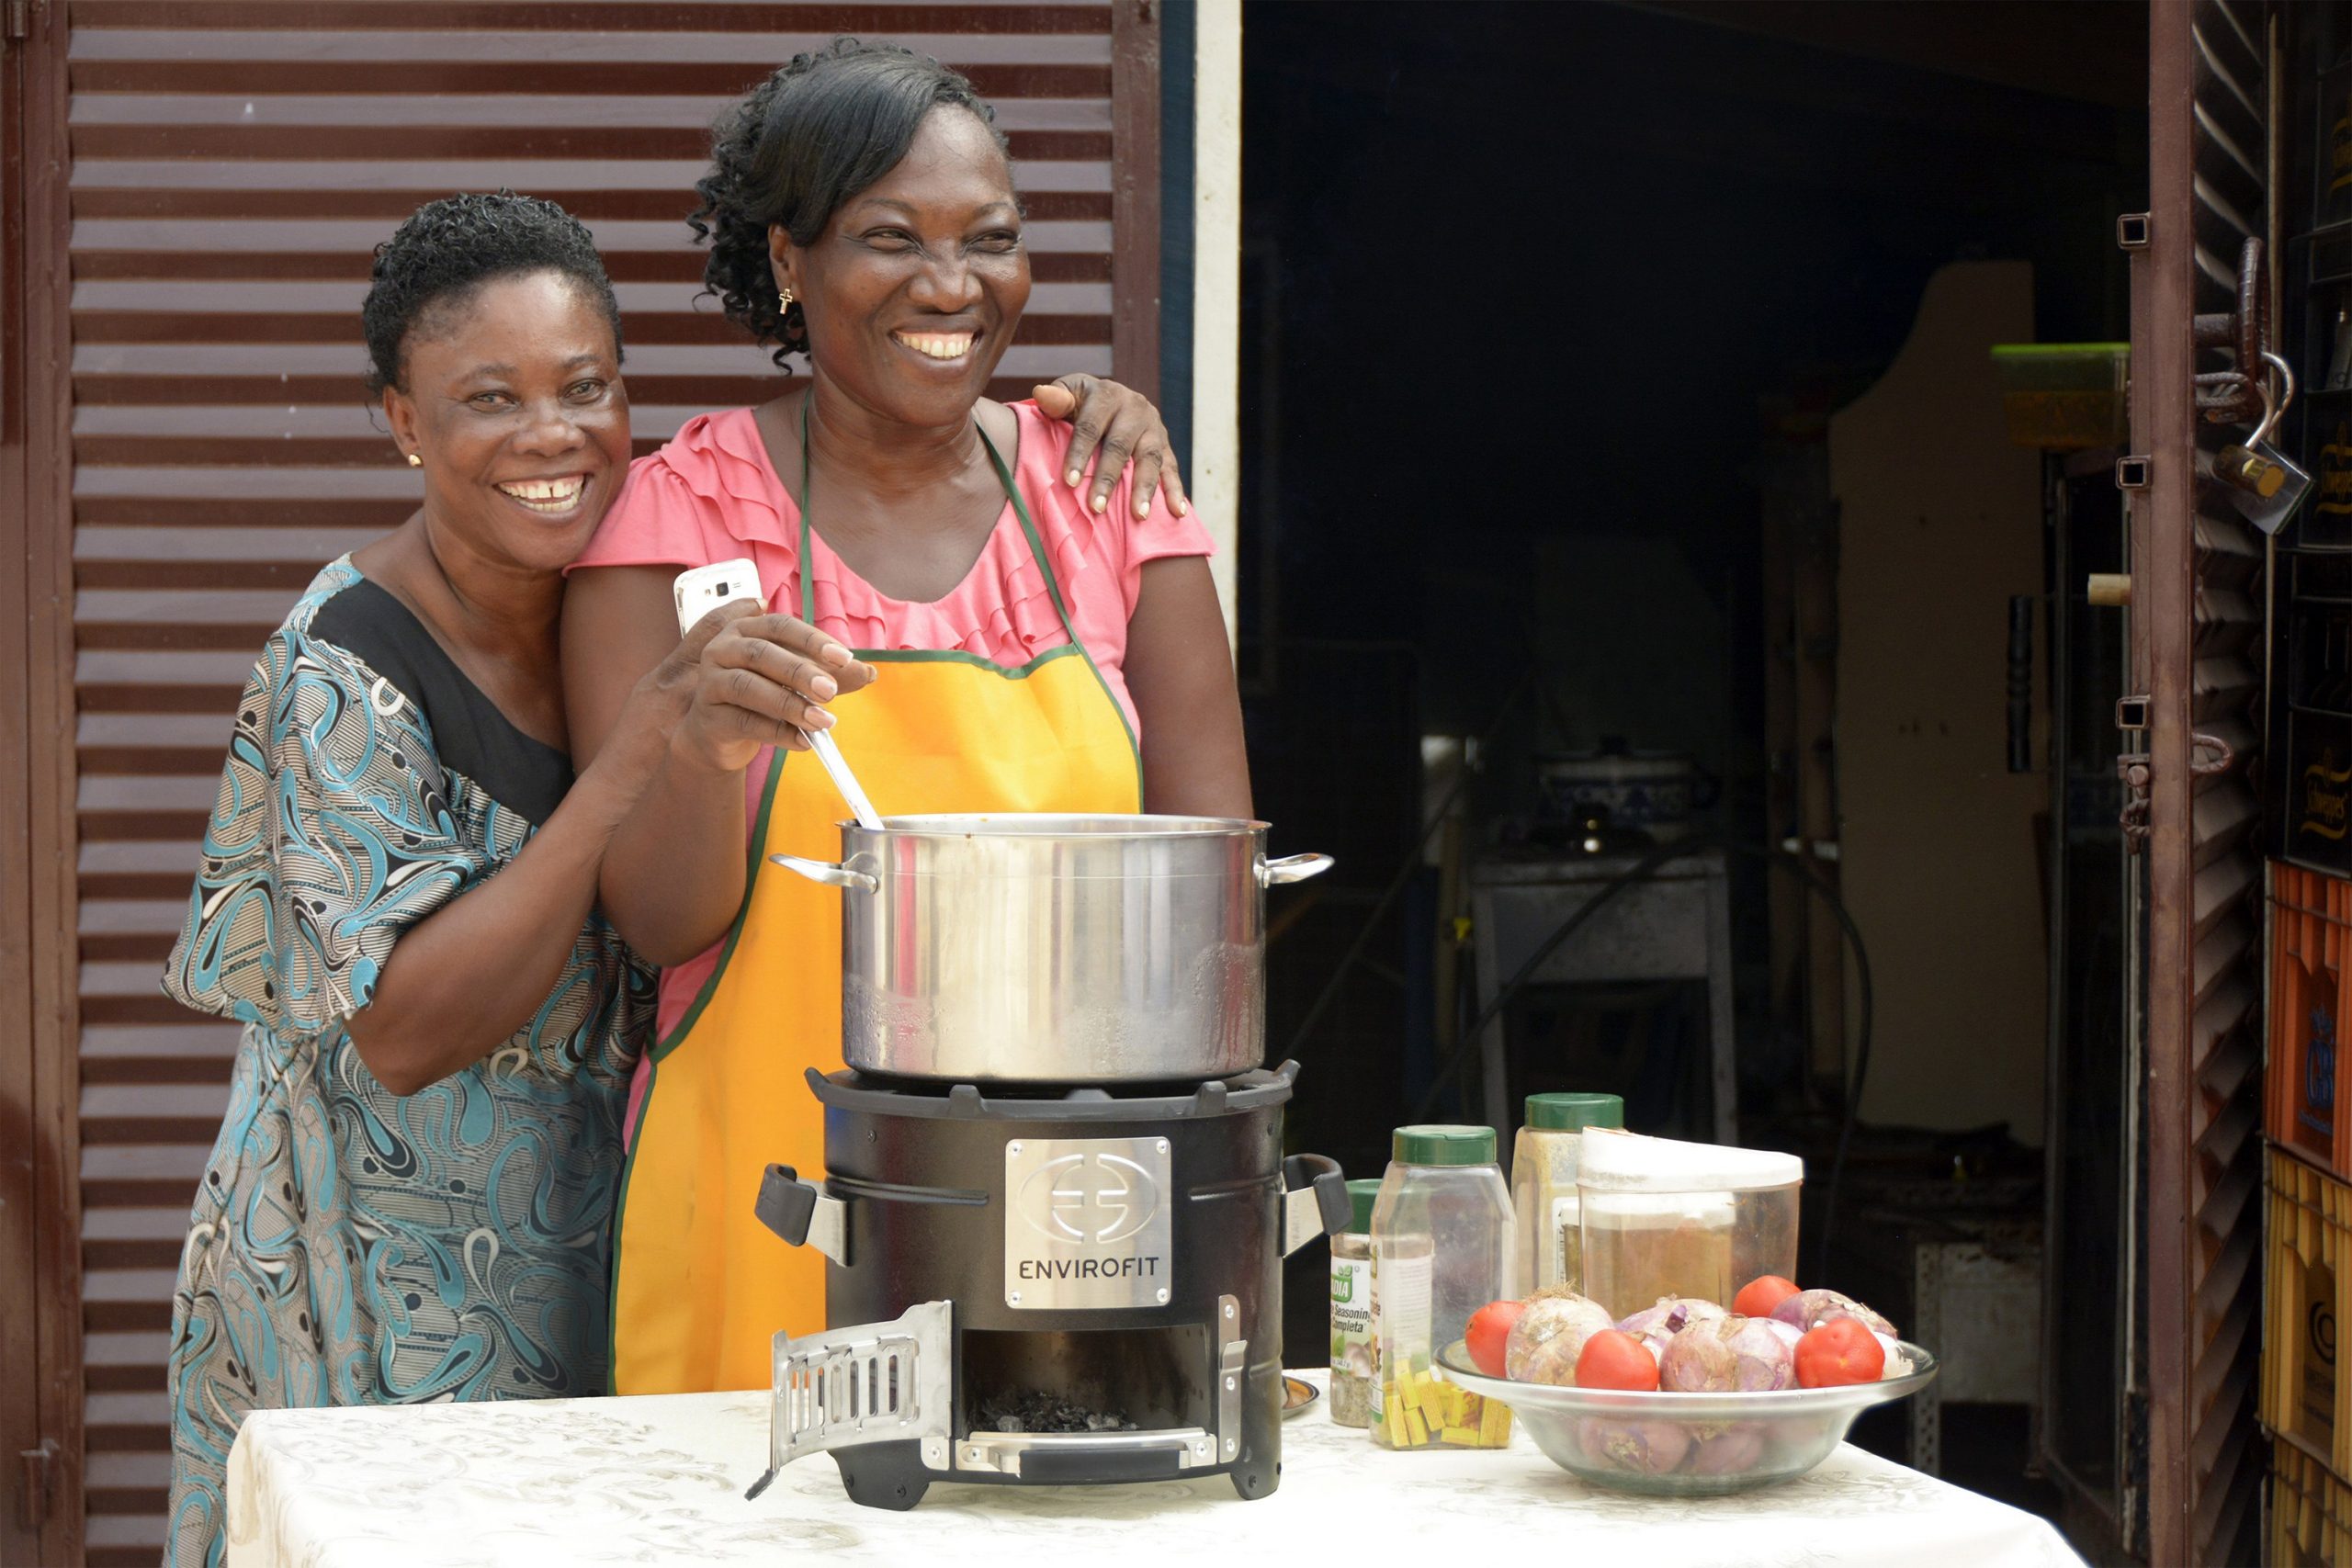 Tw ladies stirring pot on Envirofit stove